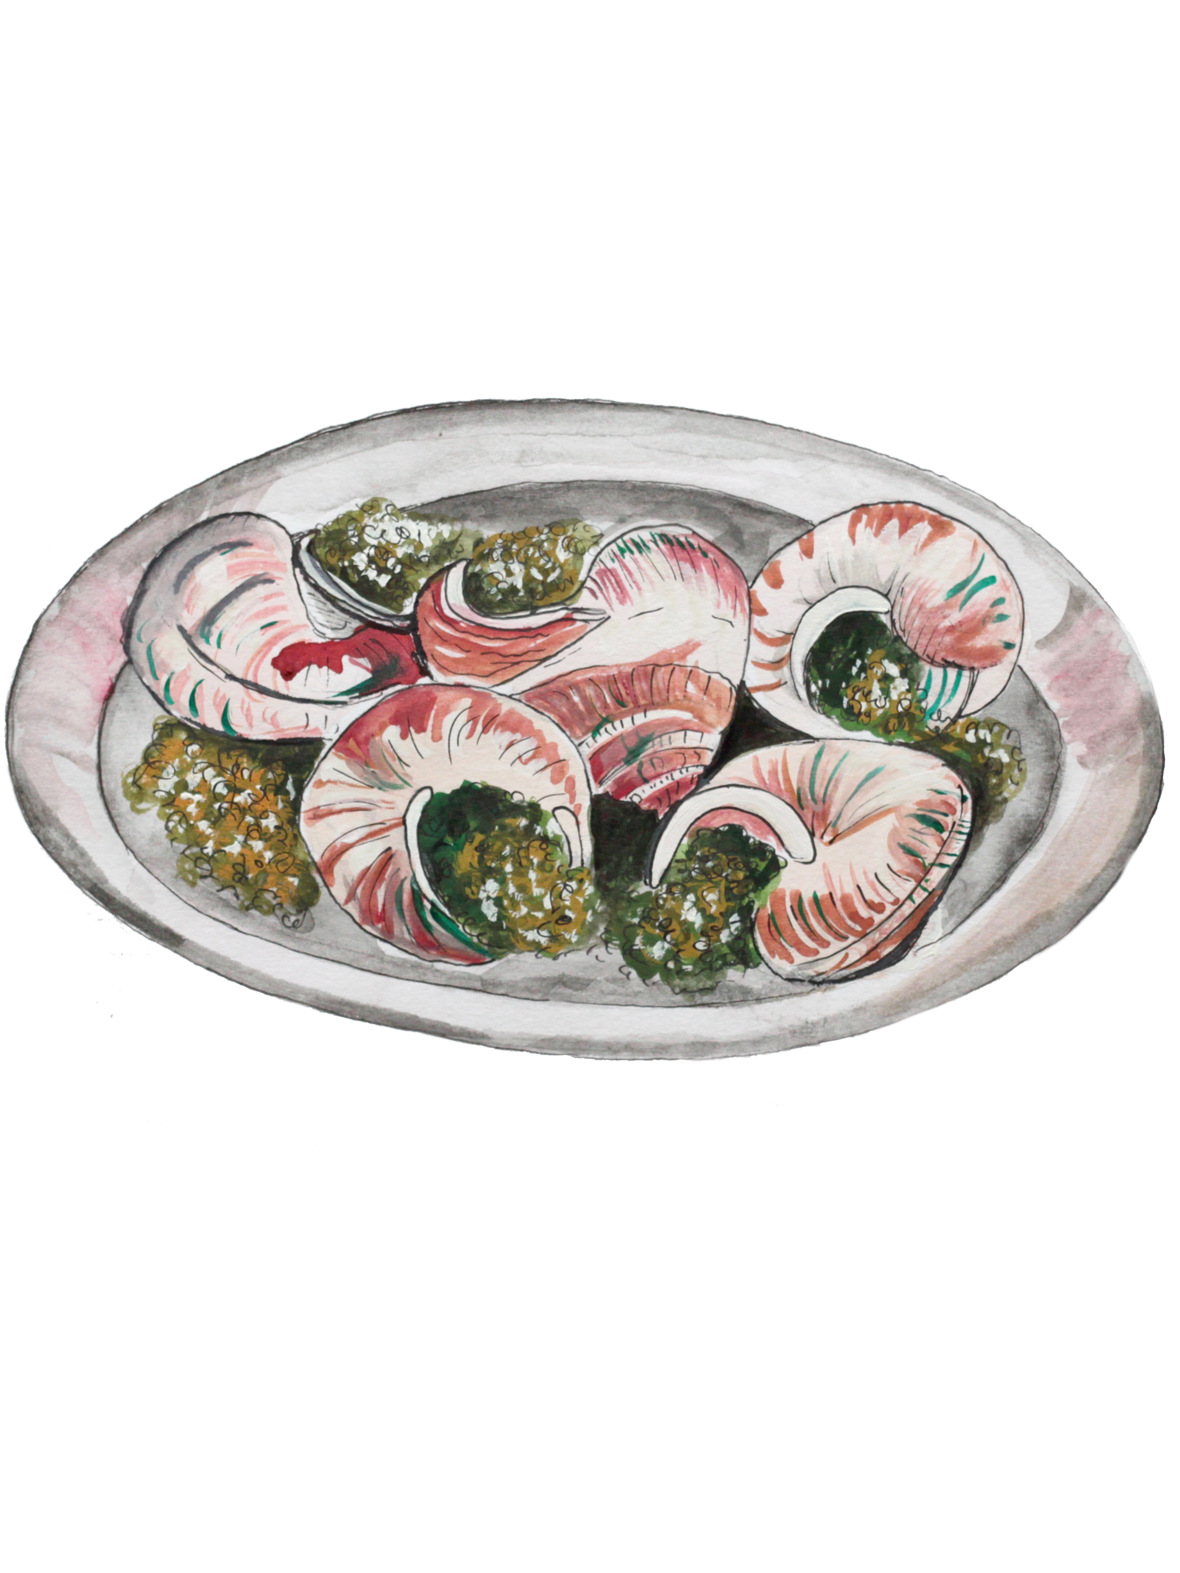 Illustration of Garlic Snails on a plate